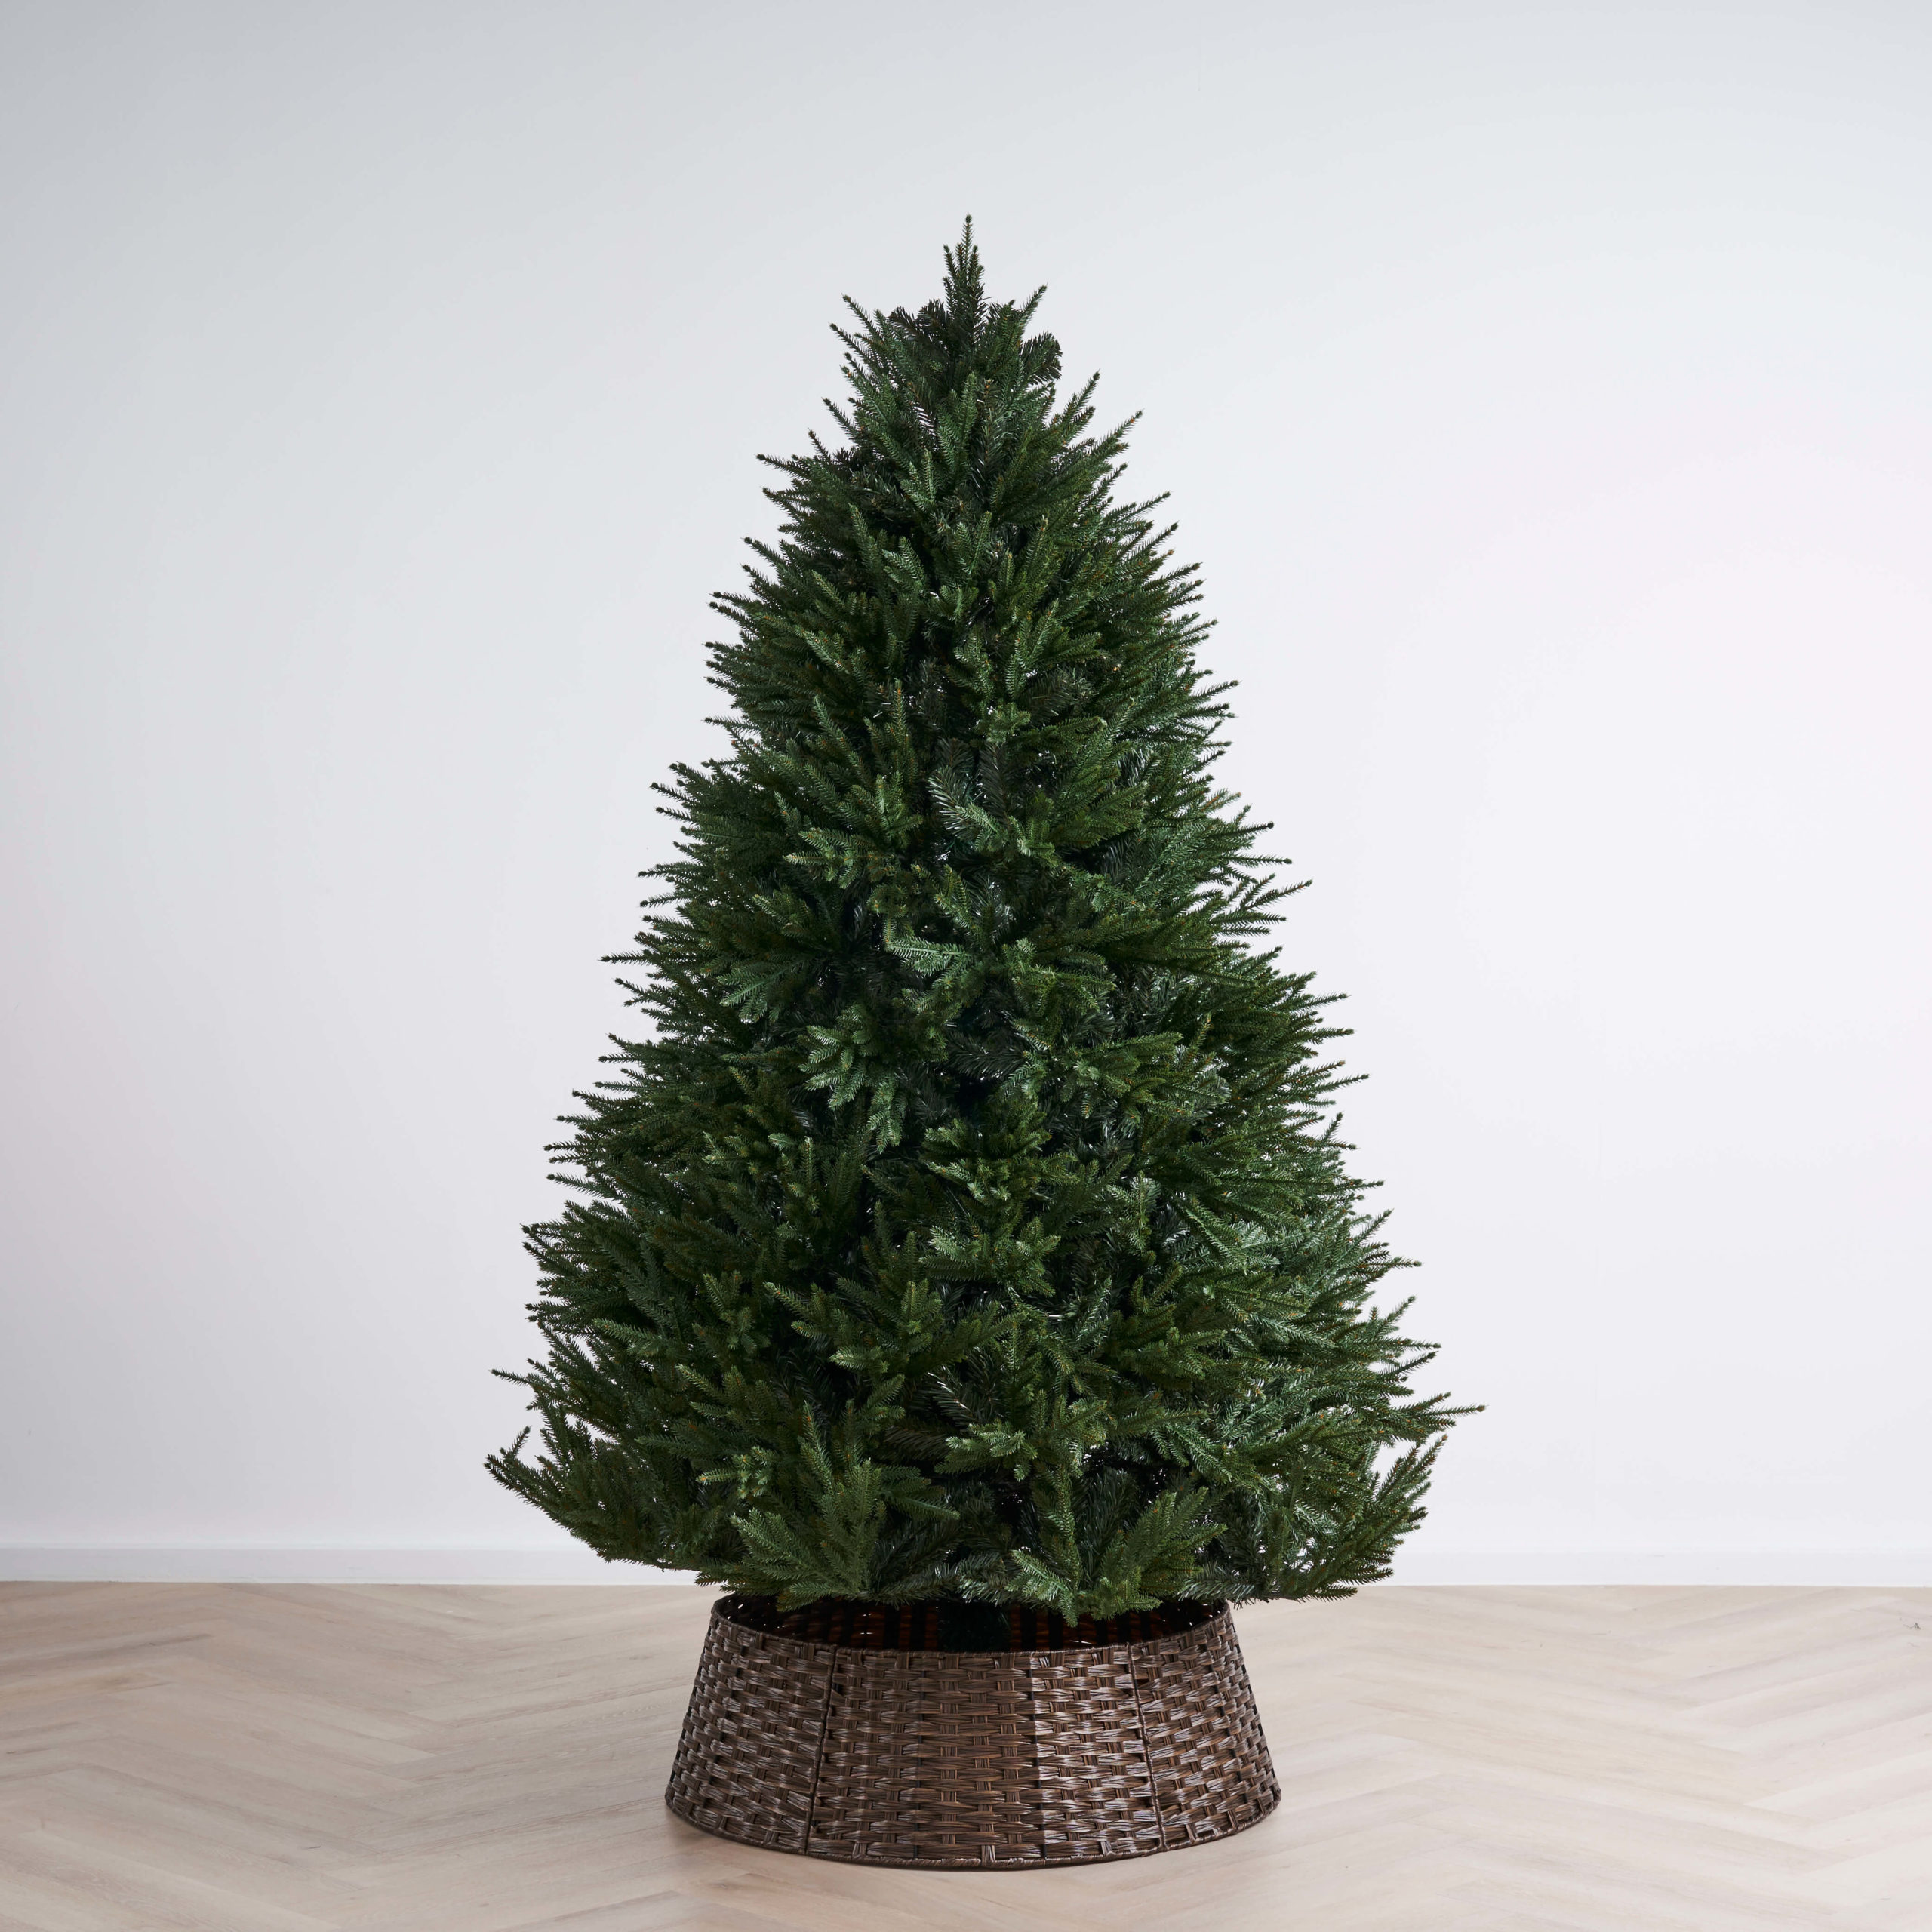 Small balsam fir Christmas tree placed on a dark brown pot